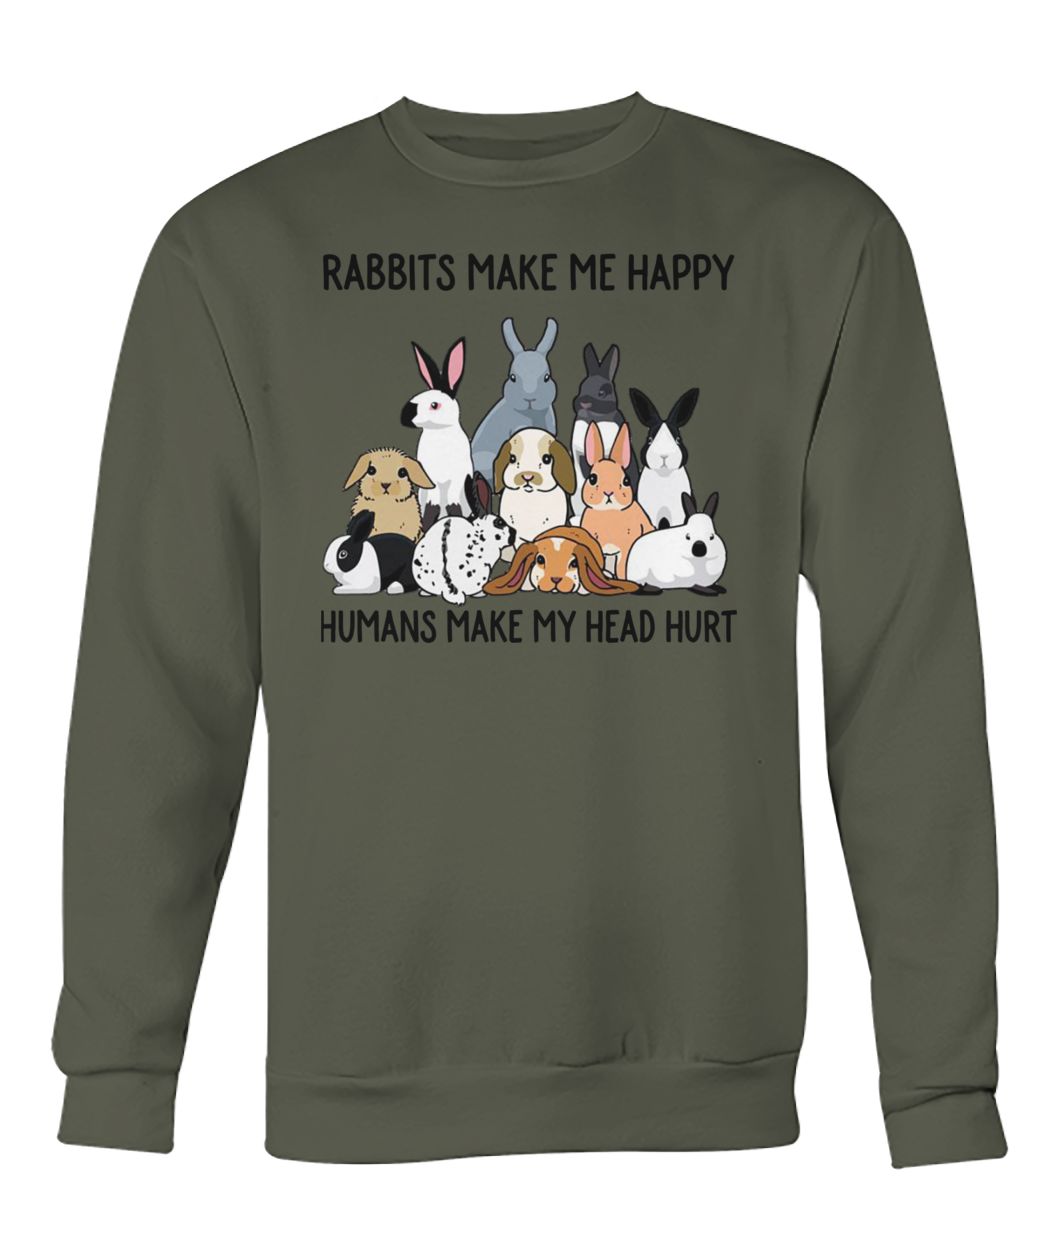 Rabbits make me happy humans make head hurt crew neck sweatshirt